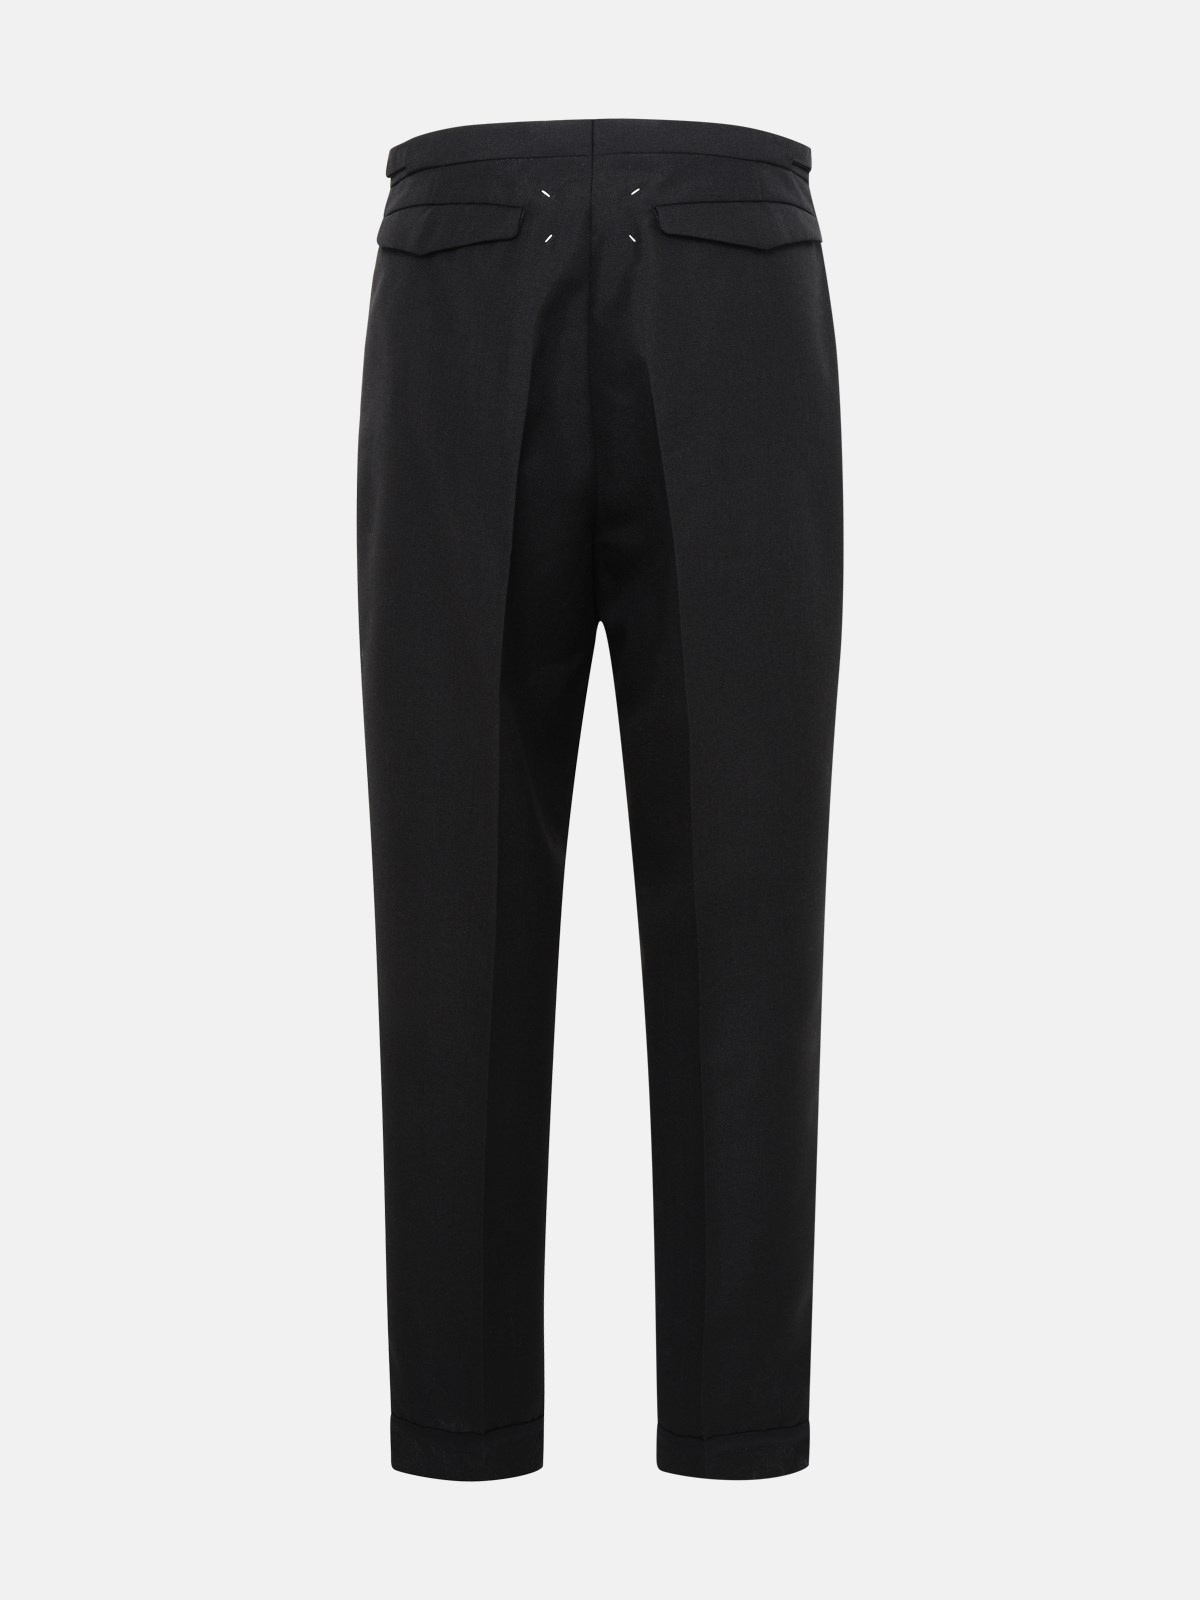 Black wool trousers - 3